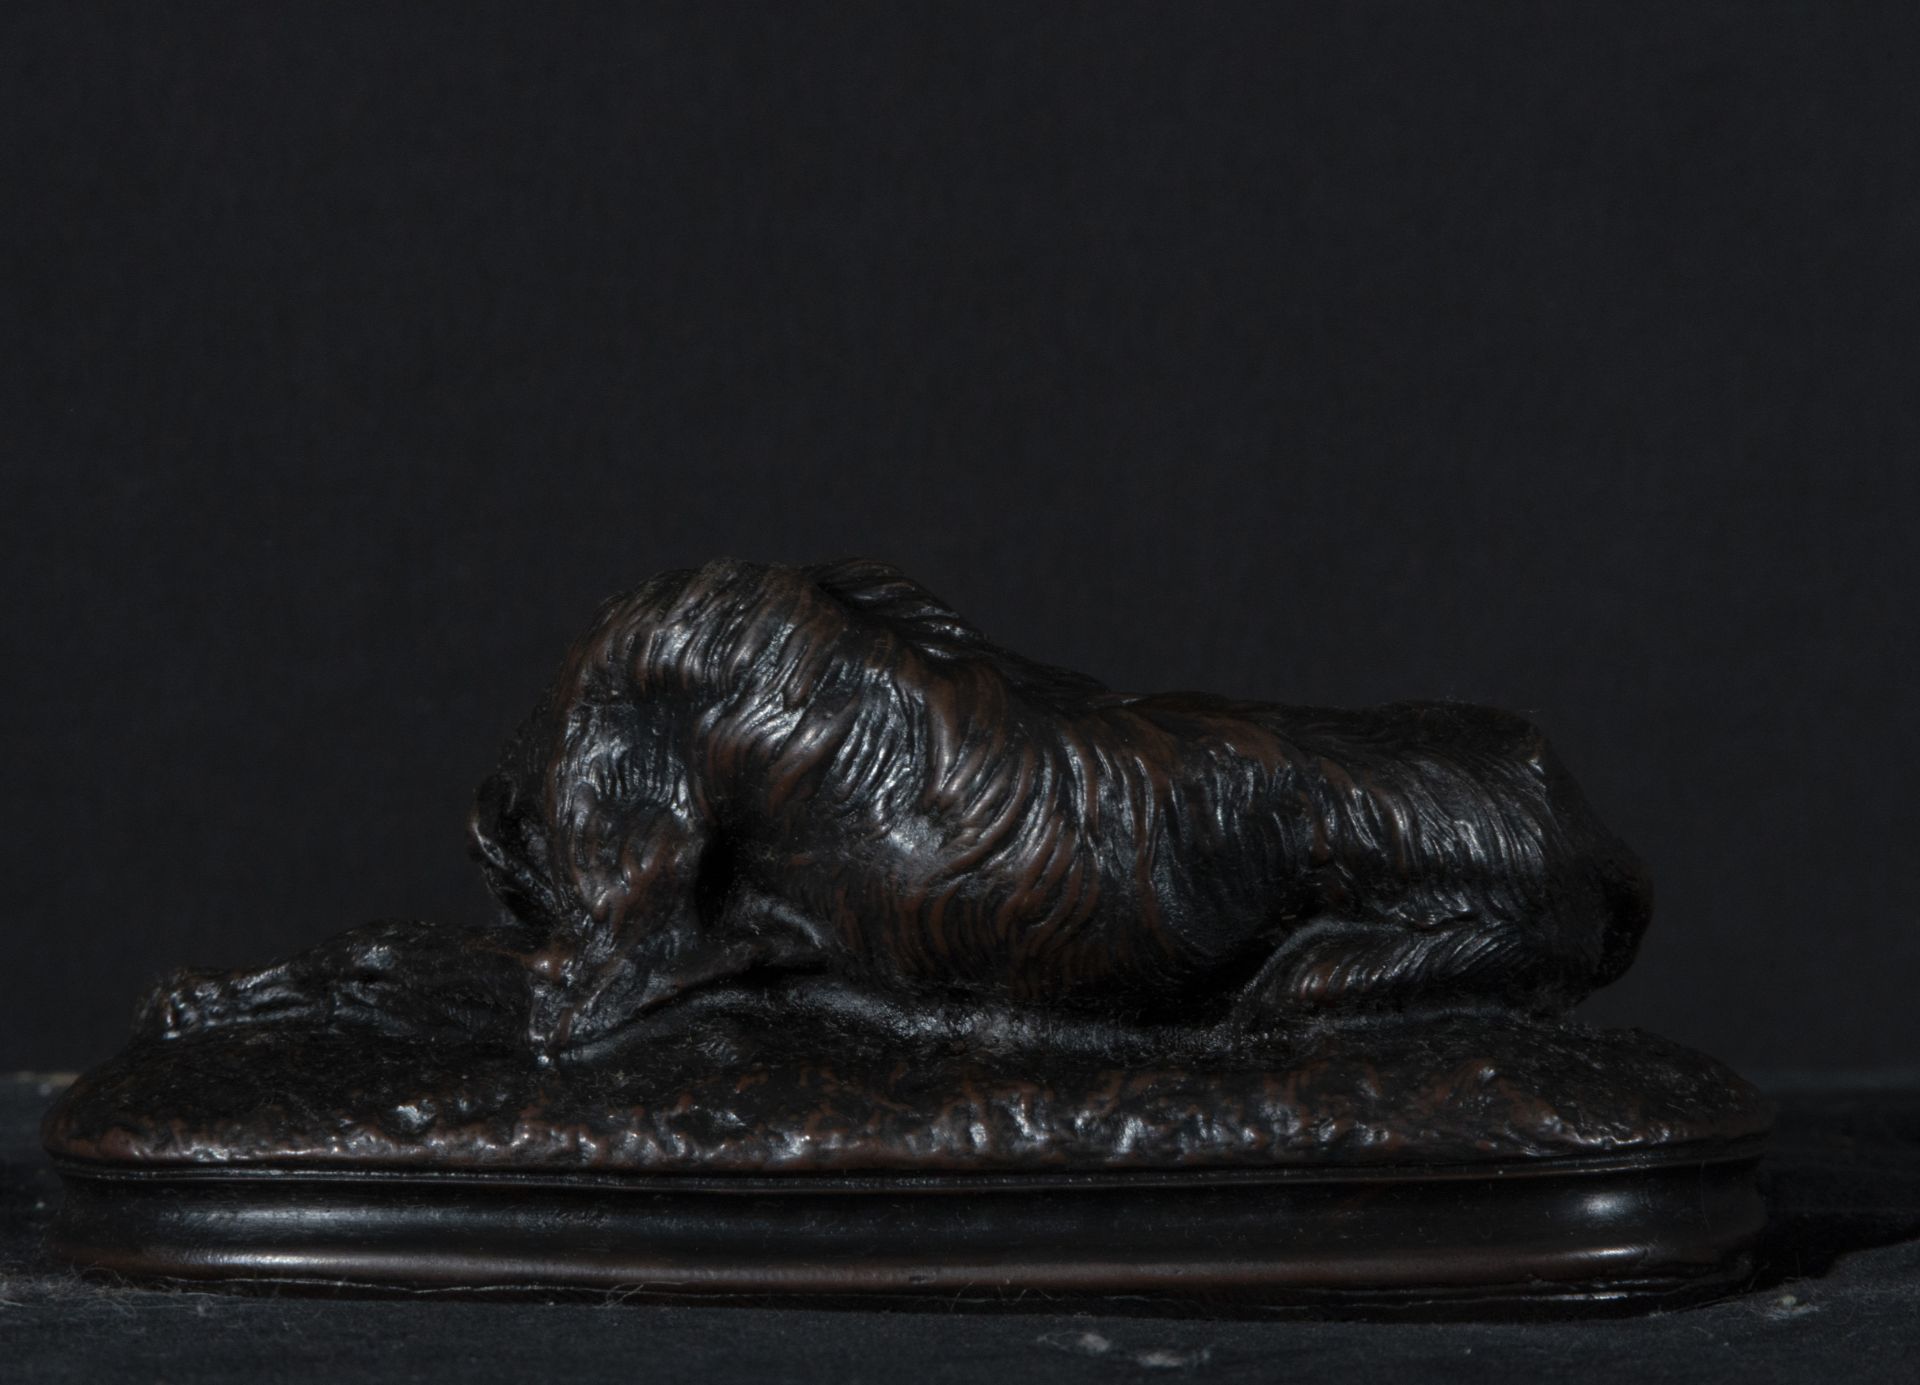 Patinated bronze dog Austria 19th century - Image 2 of 3